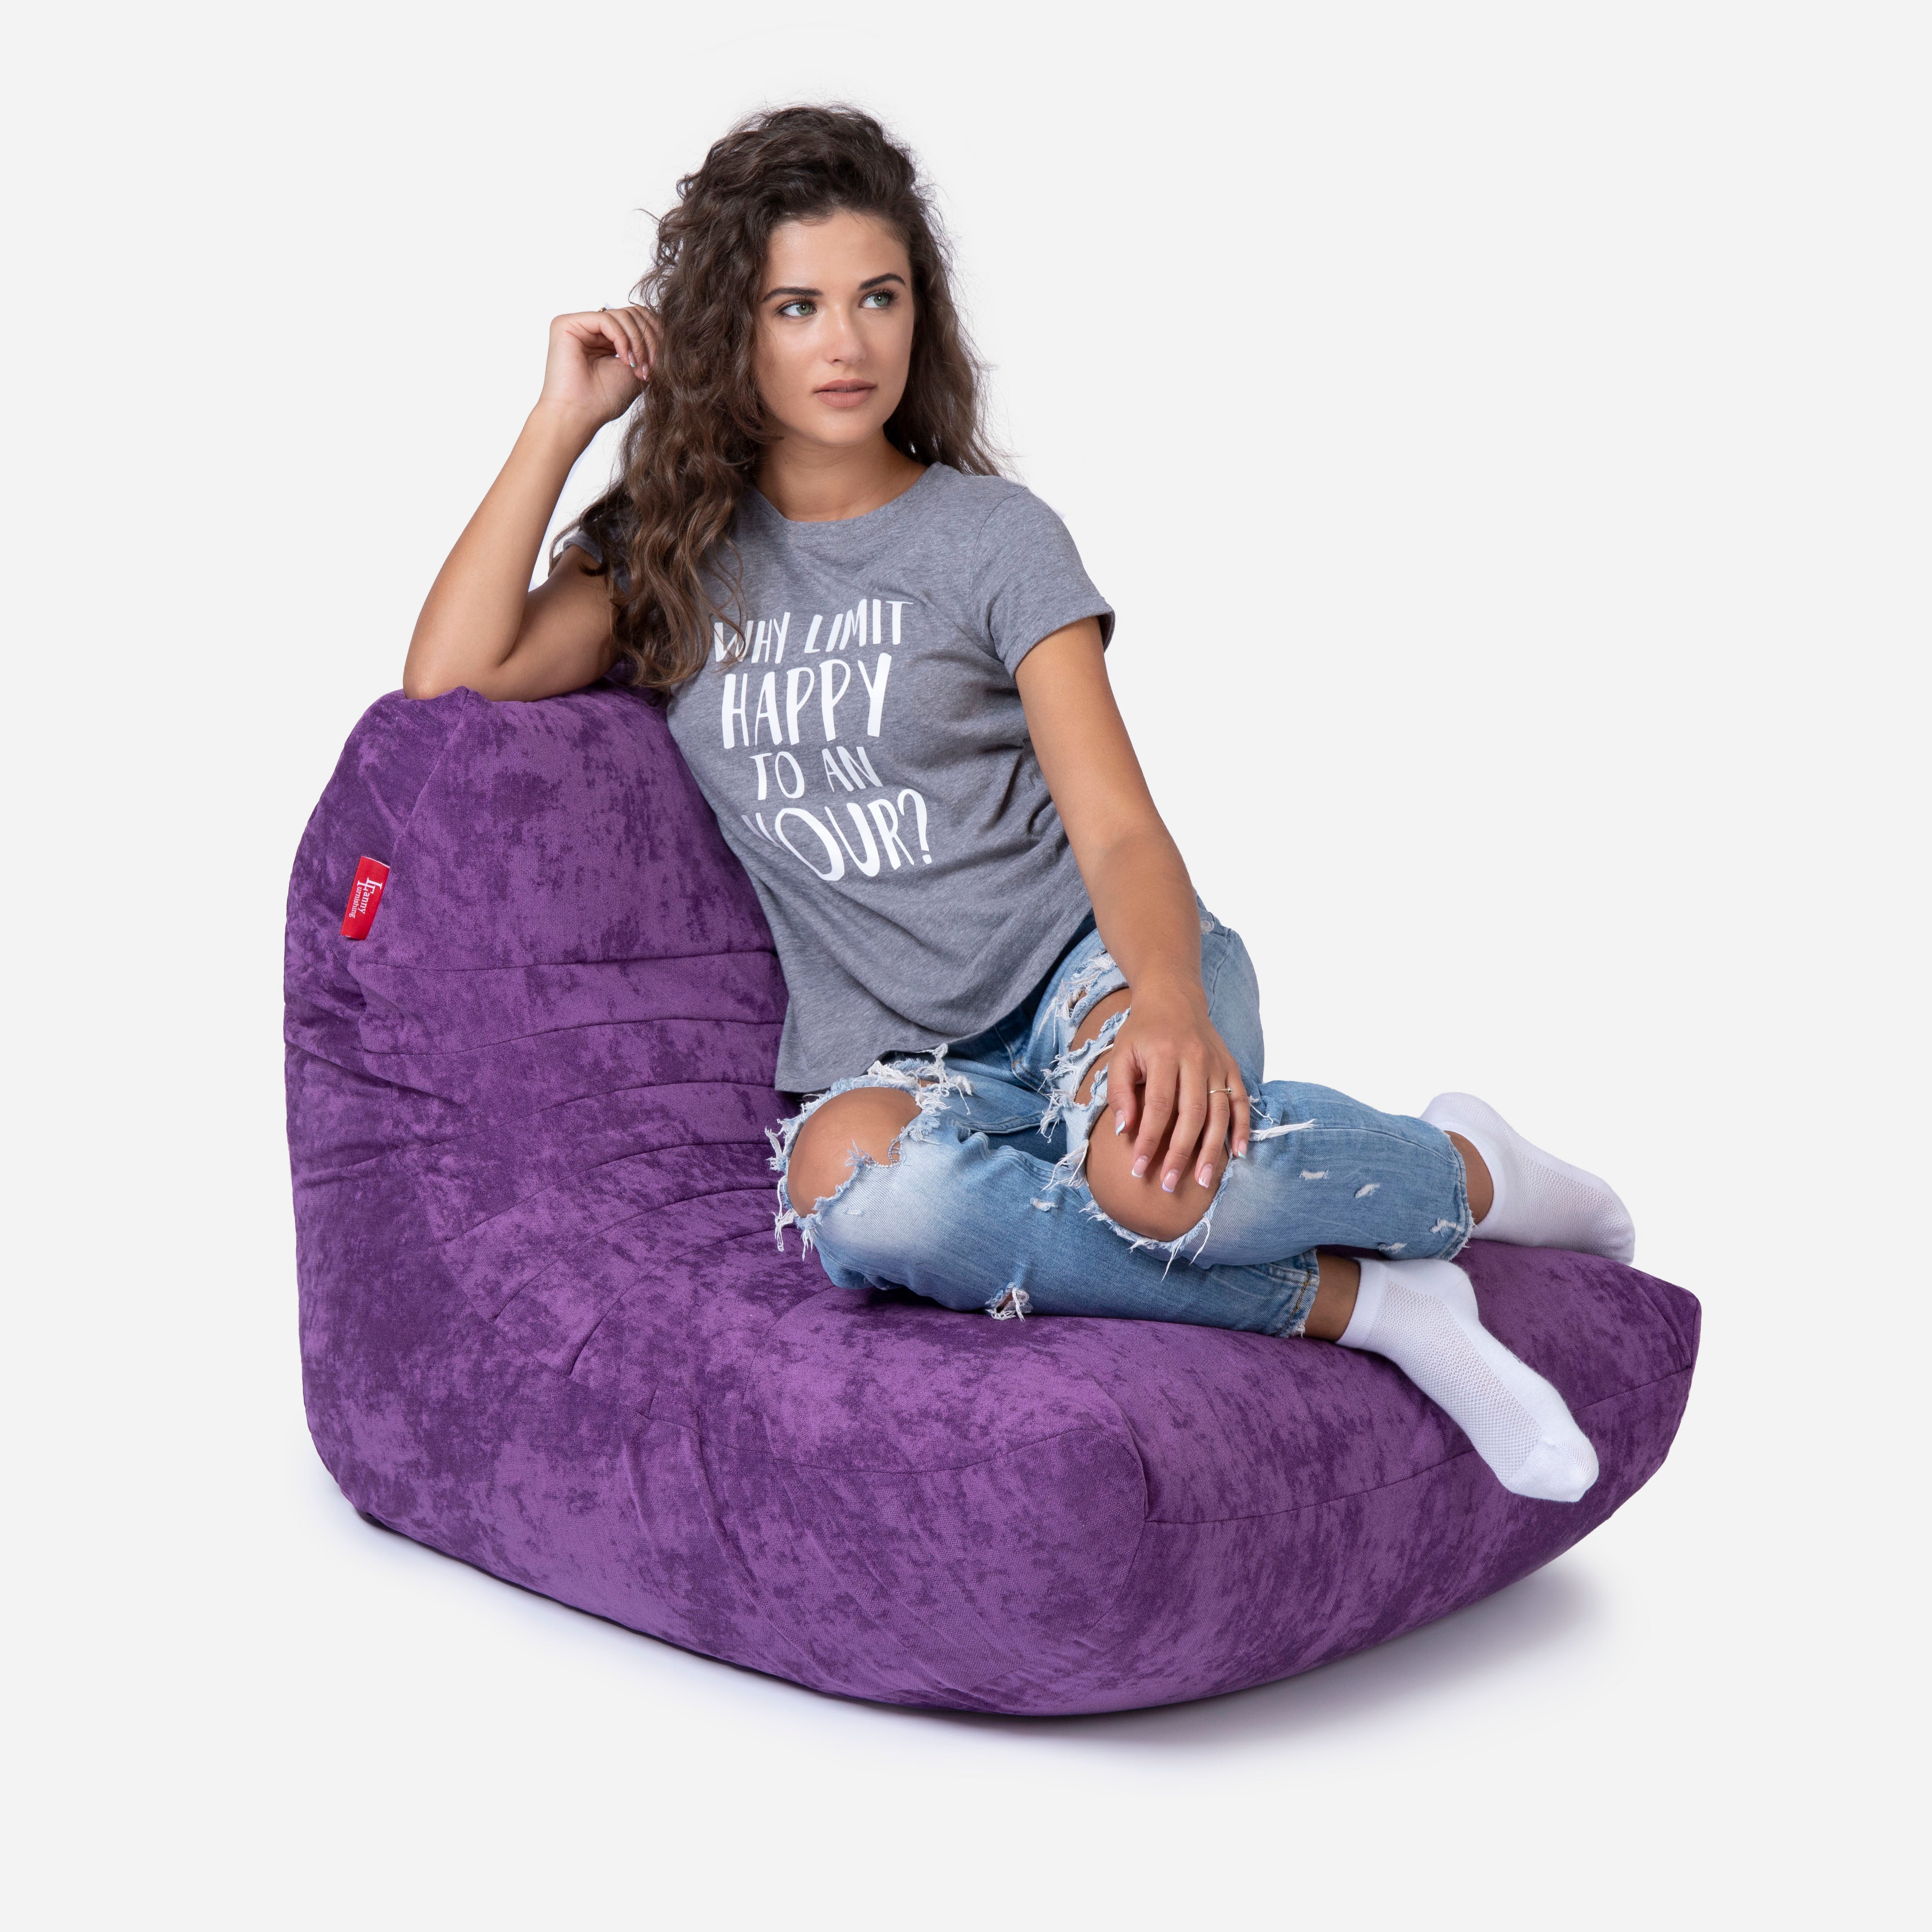 Curvy Aldo Violet Bean Bag Chair